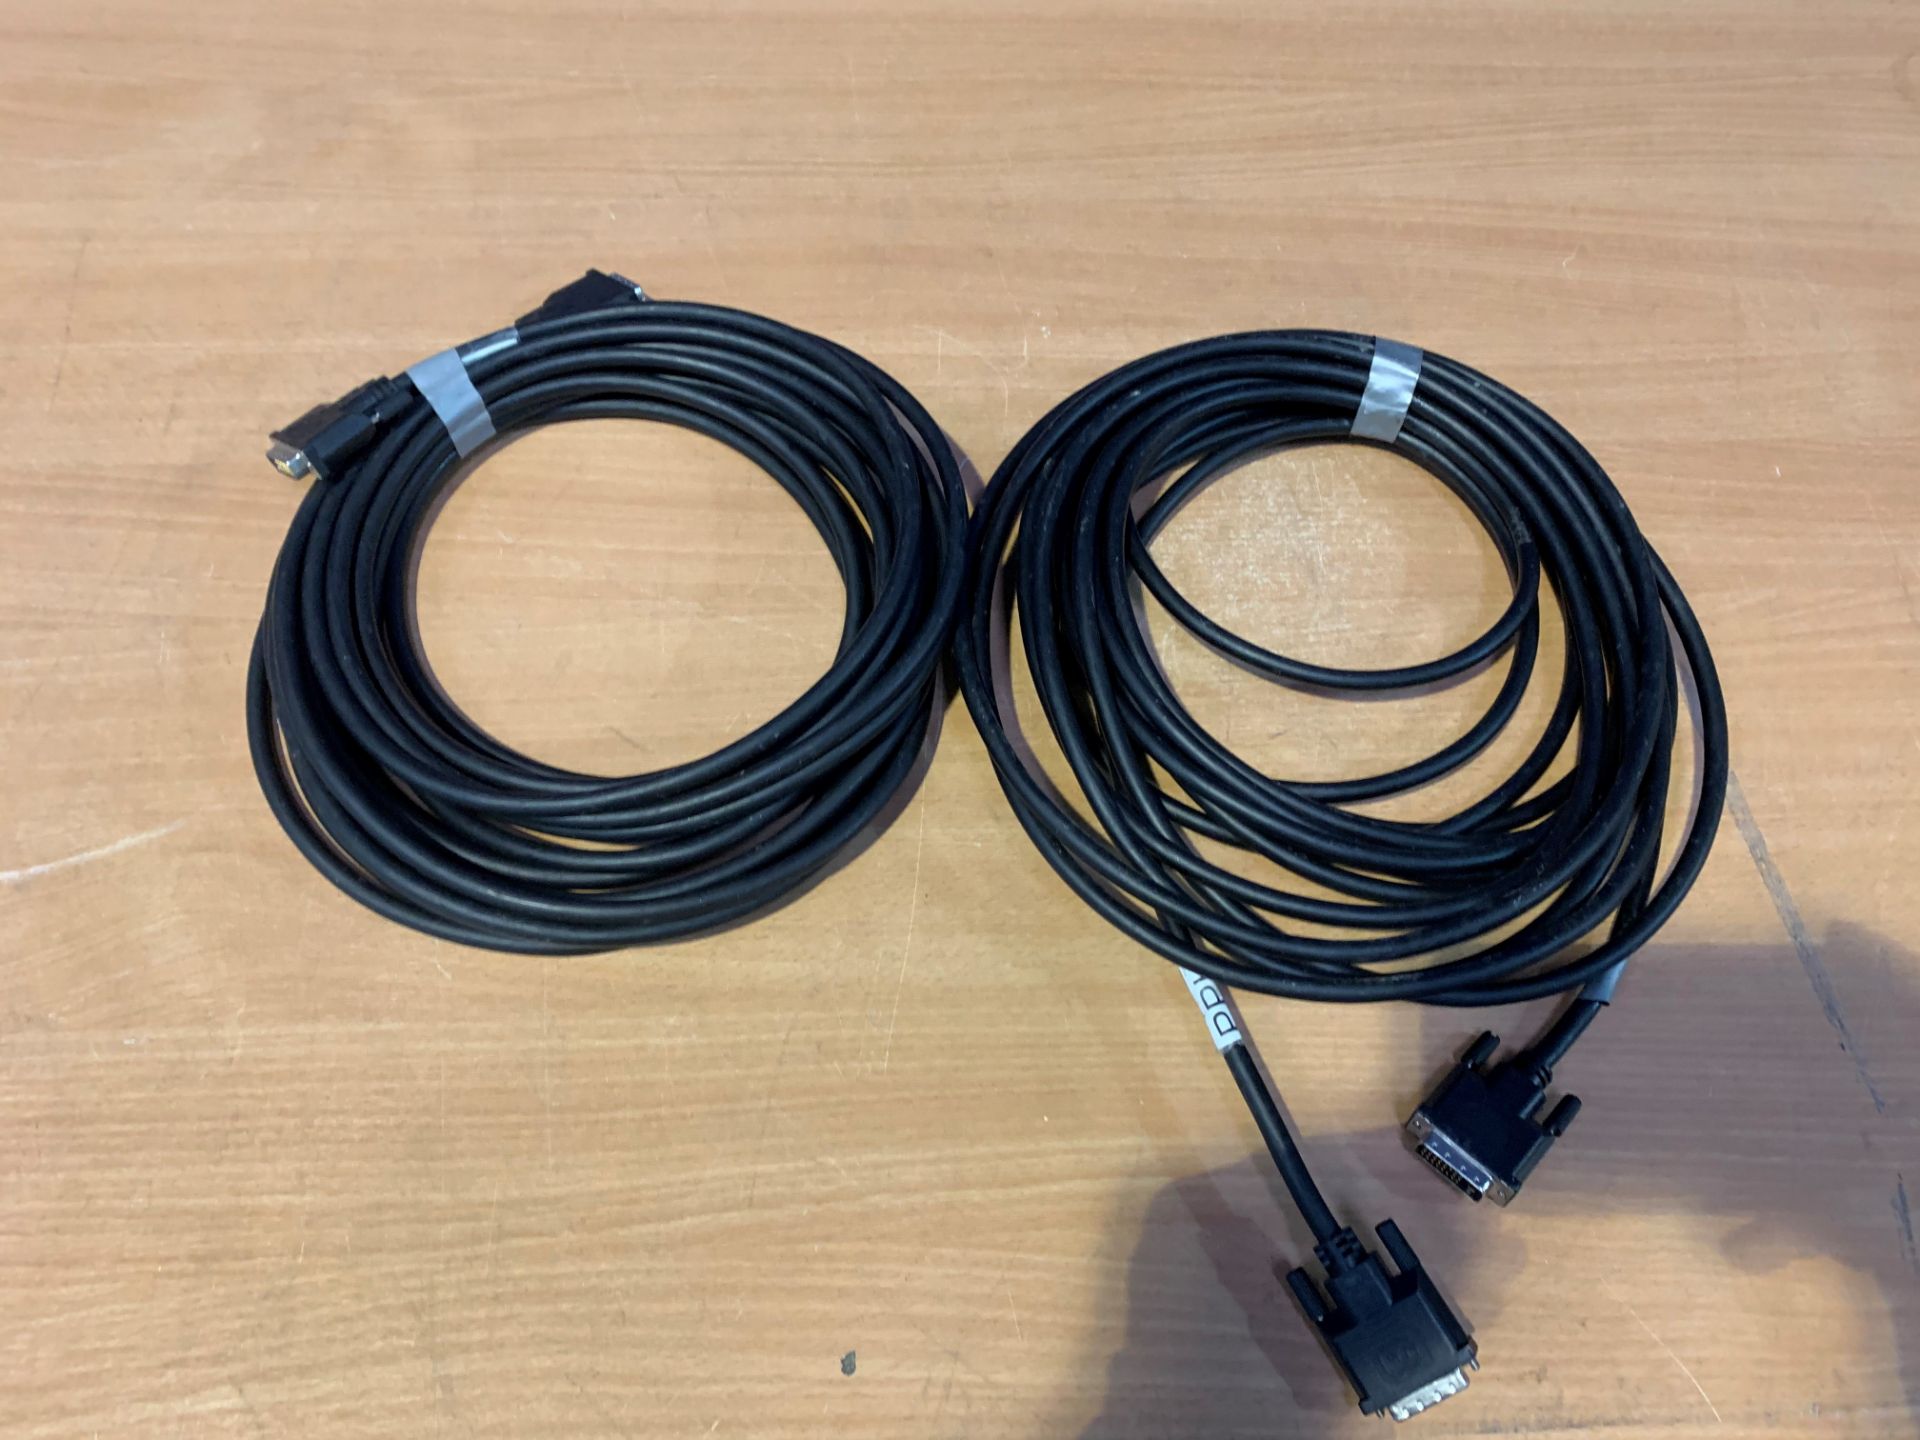 2 x 10m DVI Cables